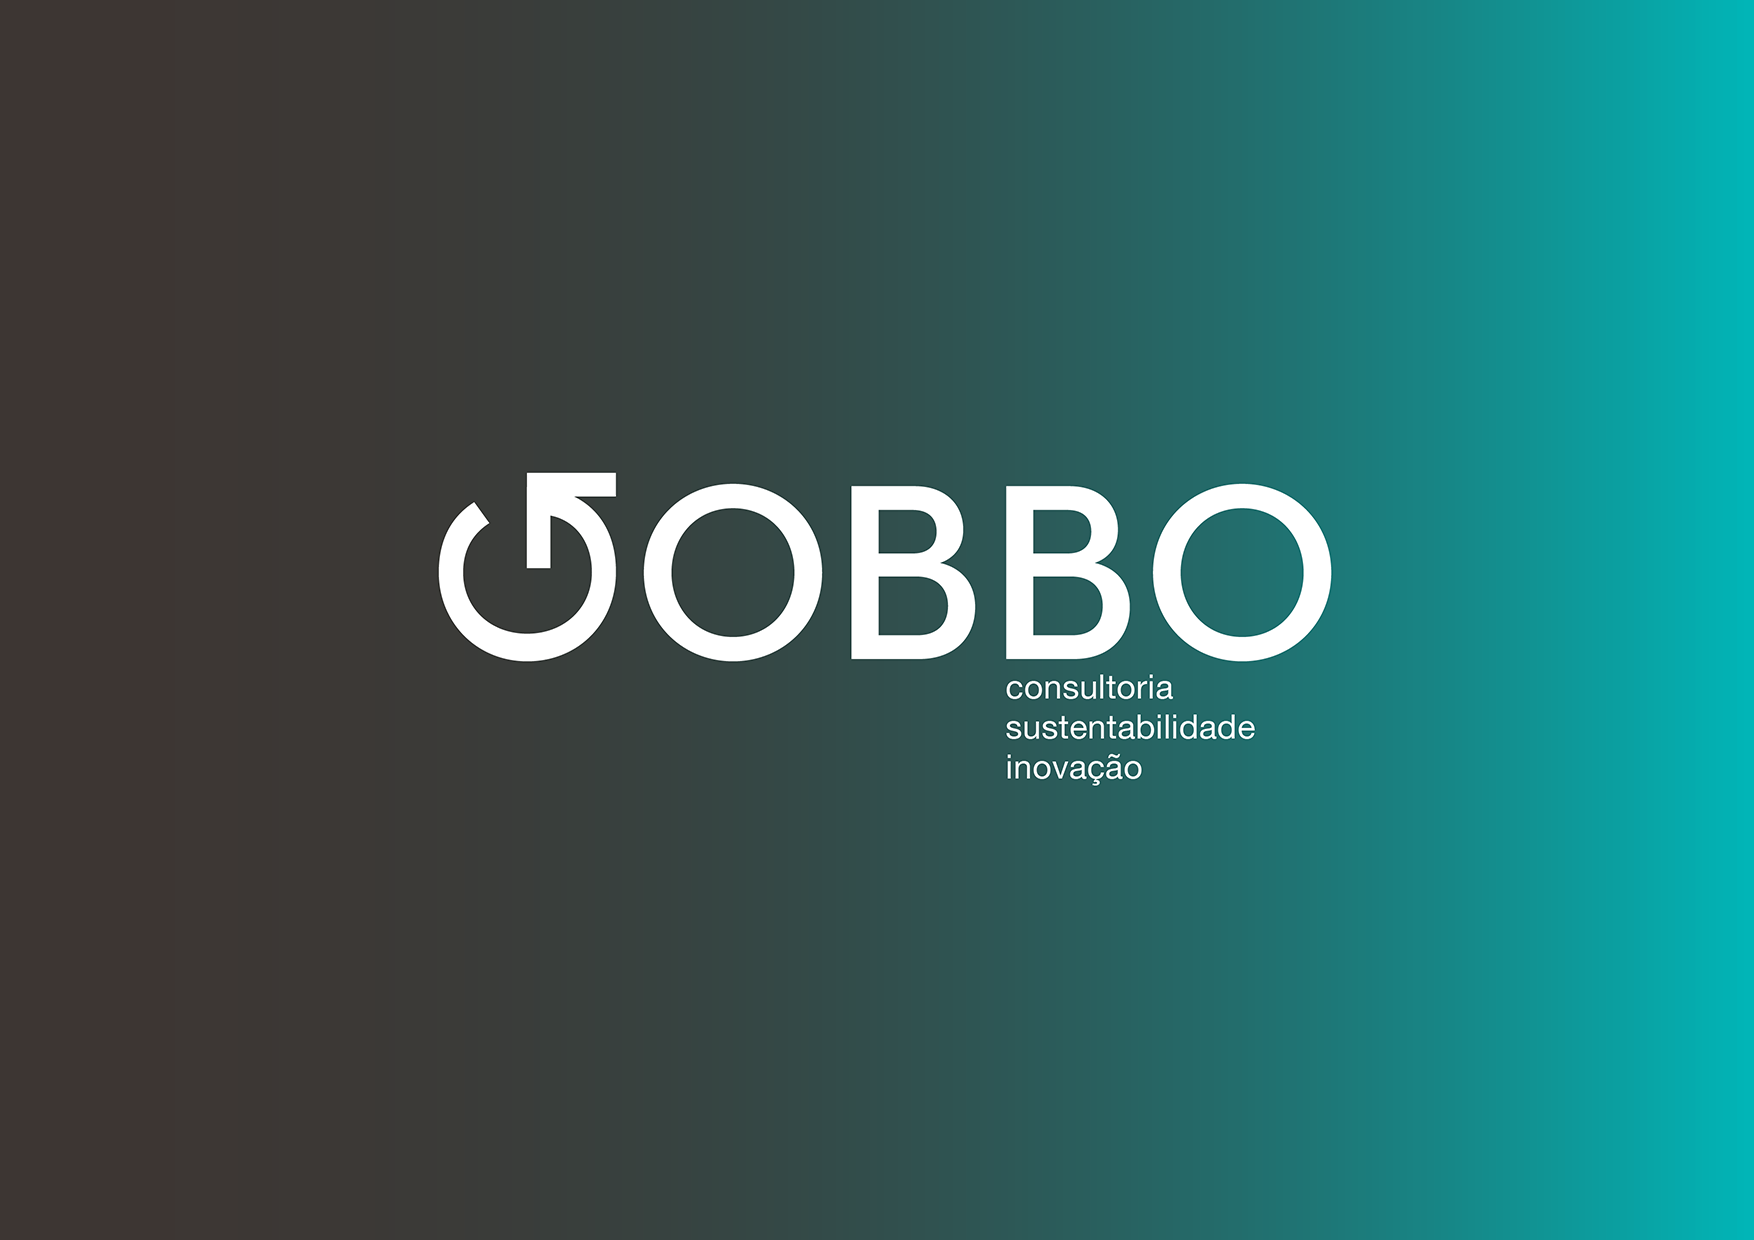 Gobbo by Daniel Cavalcanti - Creative Work